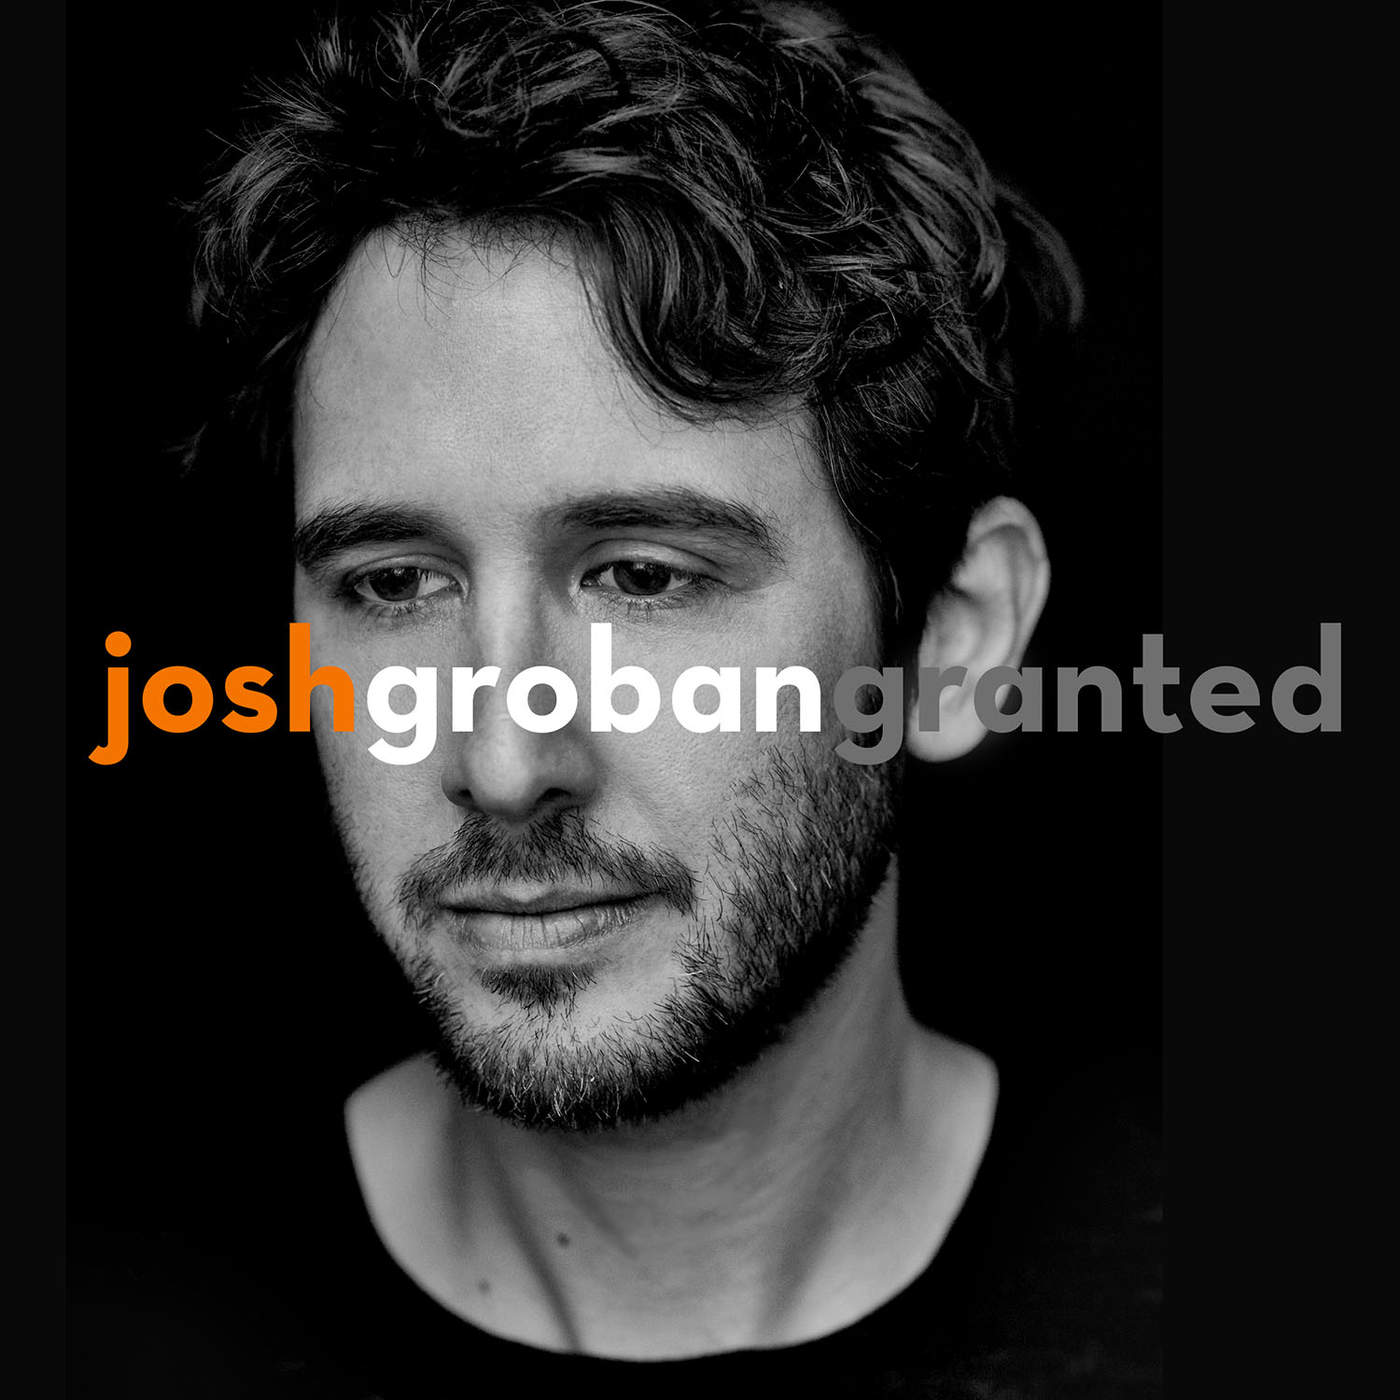 Josh Groban Granted